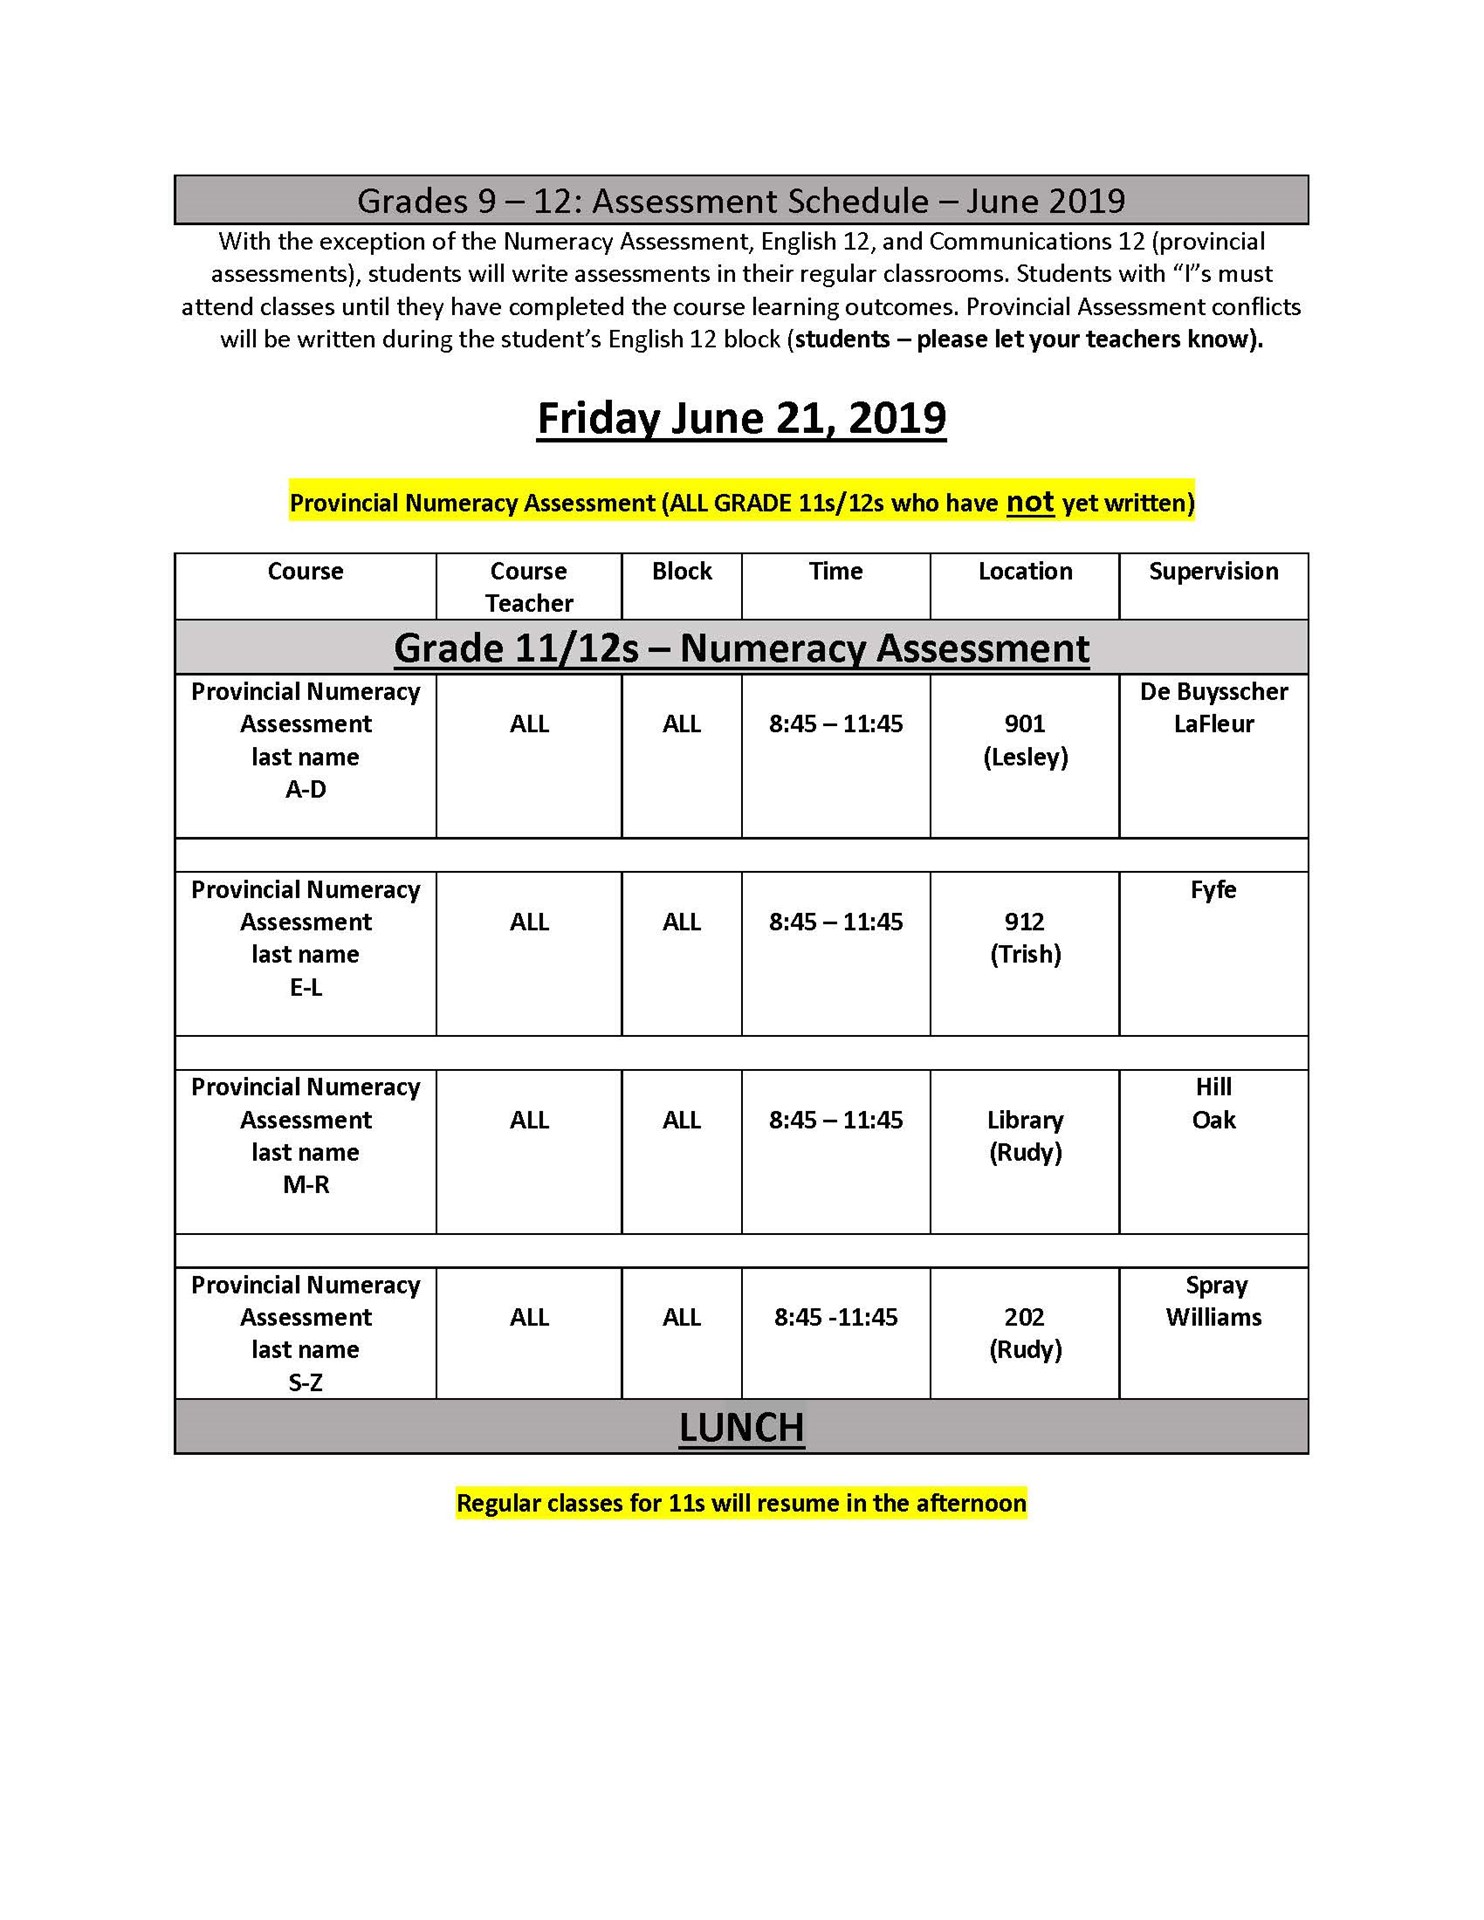 Exam Schedule Updated June 19_Page_1.jpg